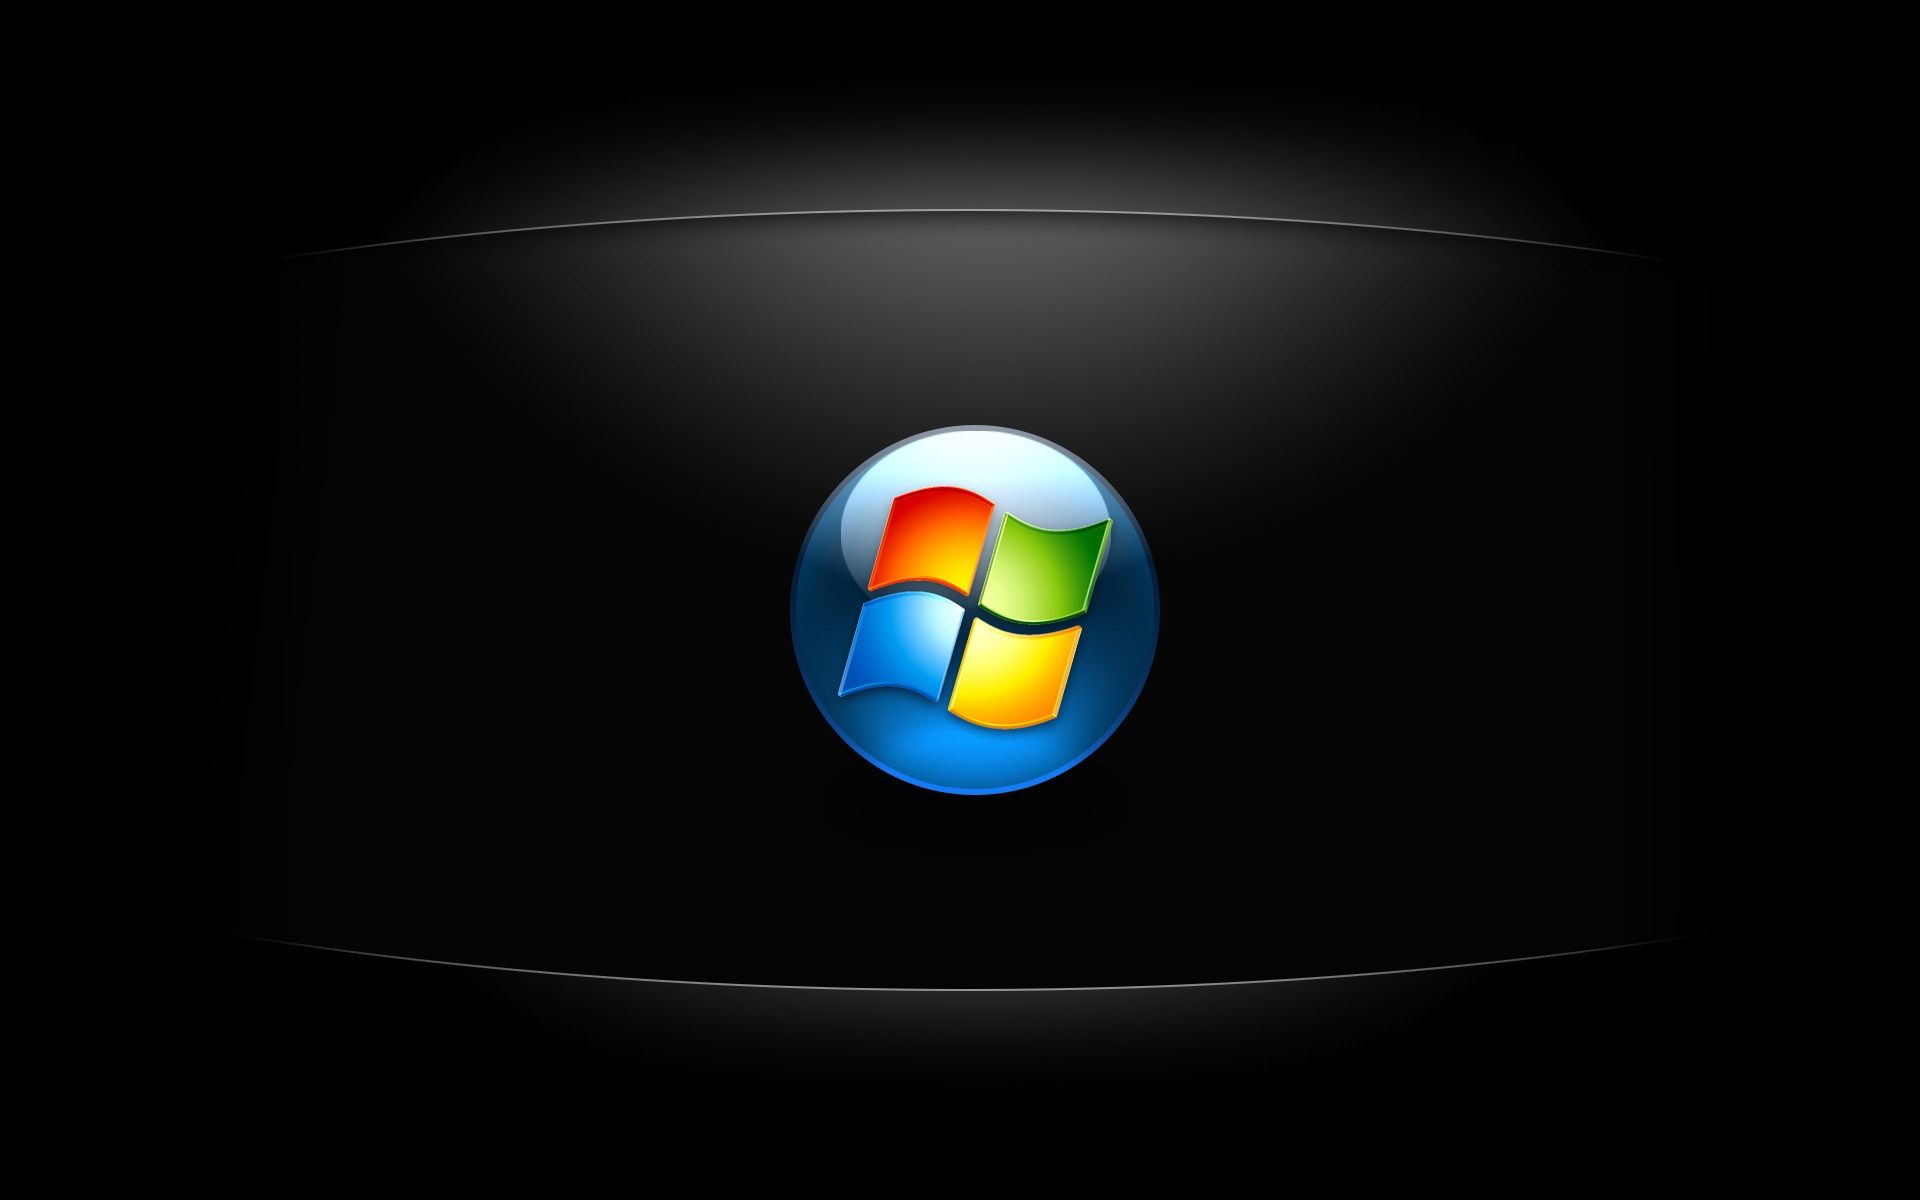 sfondi desktop hd per windows 7,sistema operativo,font,grafica,tecnologia,emblema